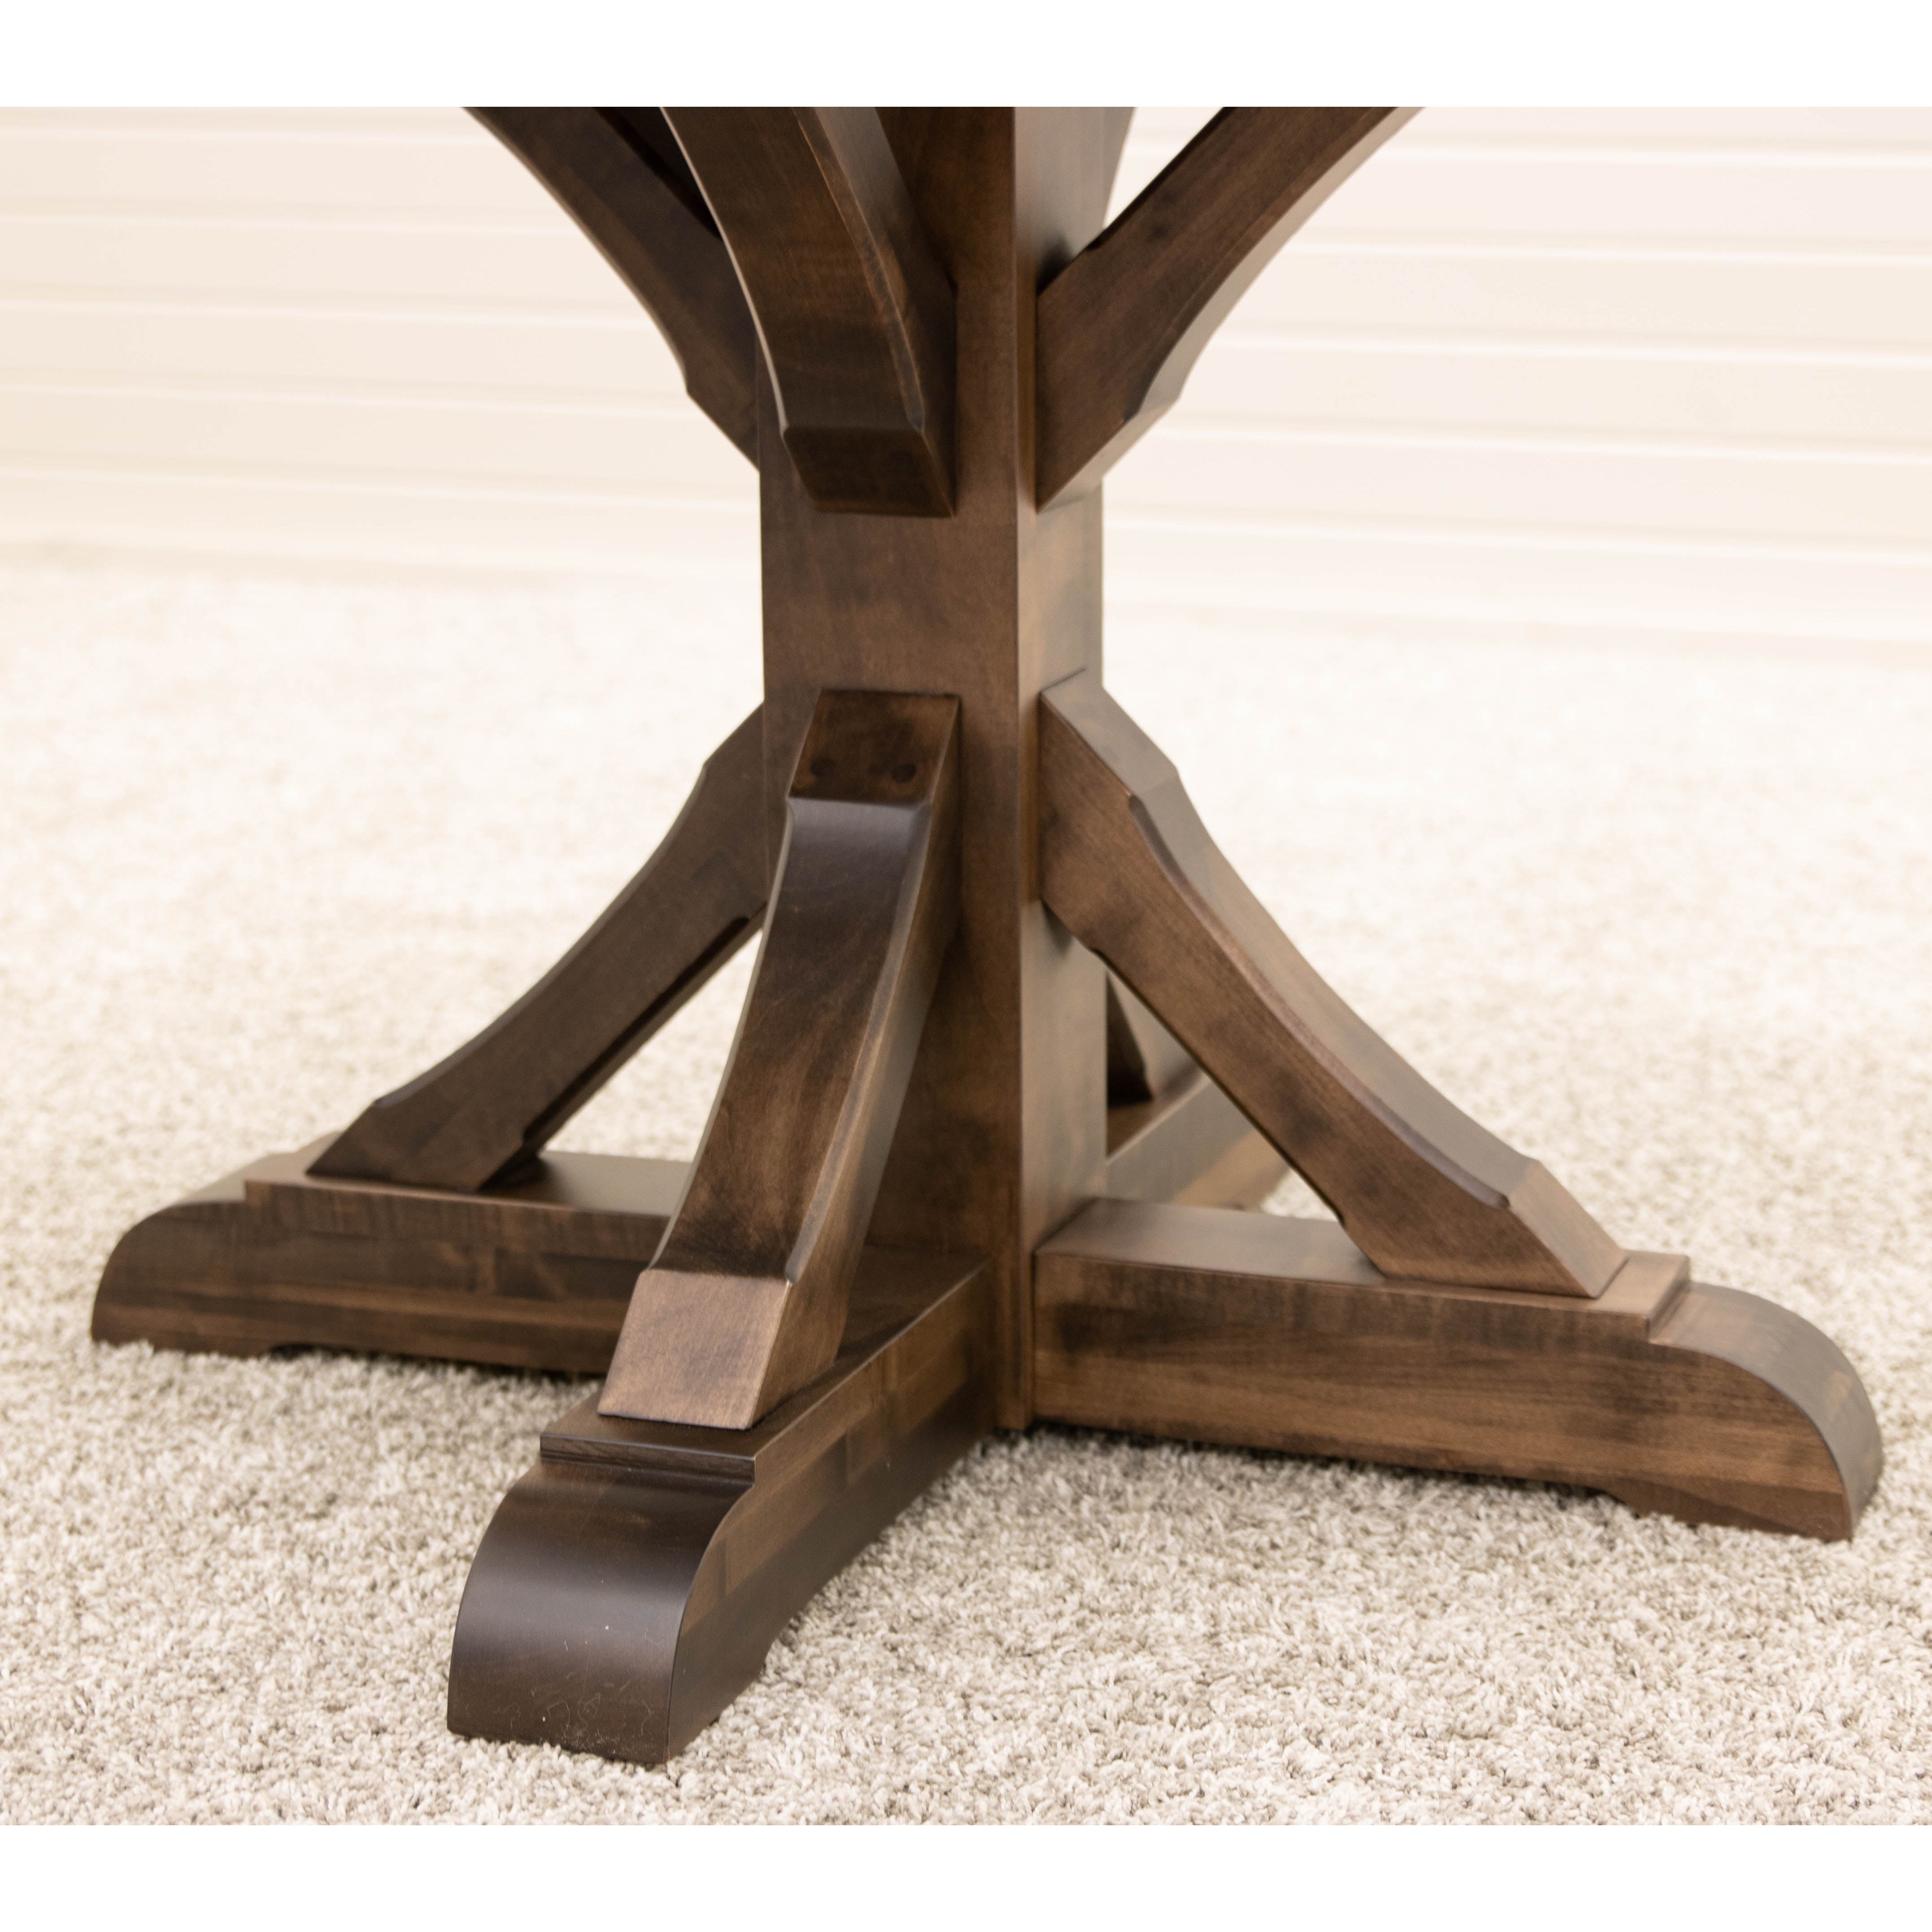 Newport Single Pedestal Table